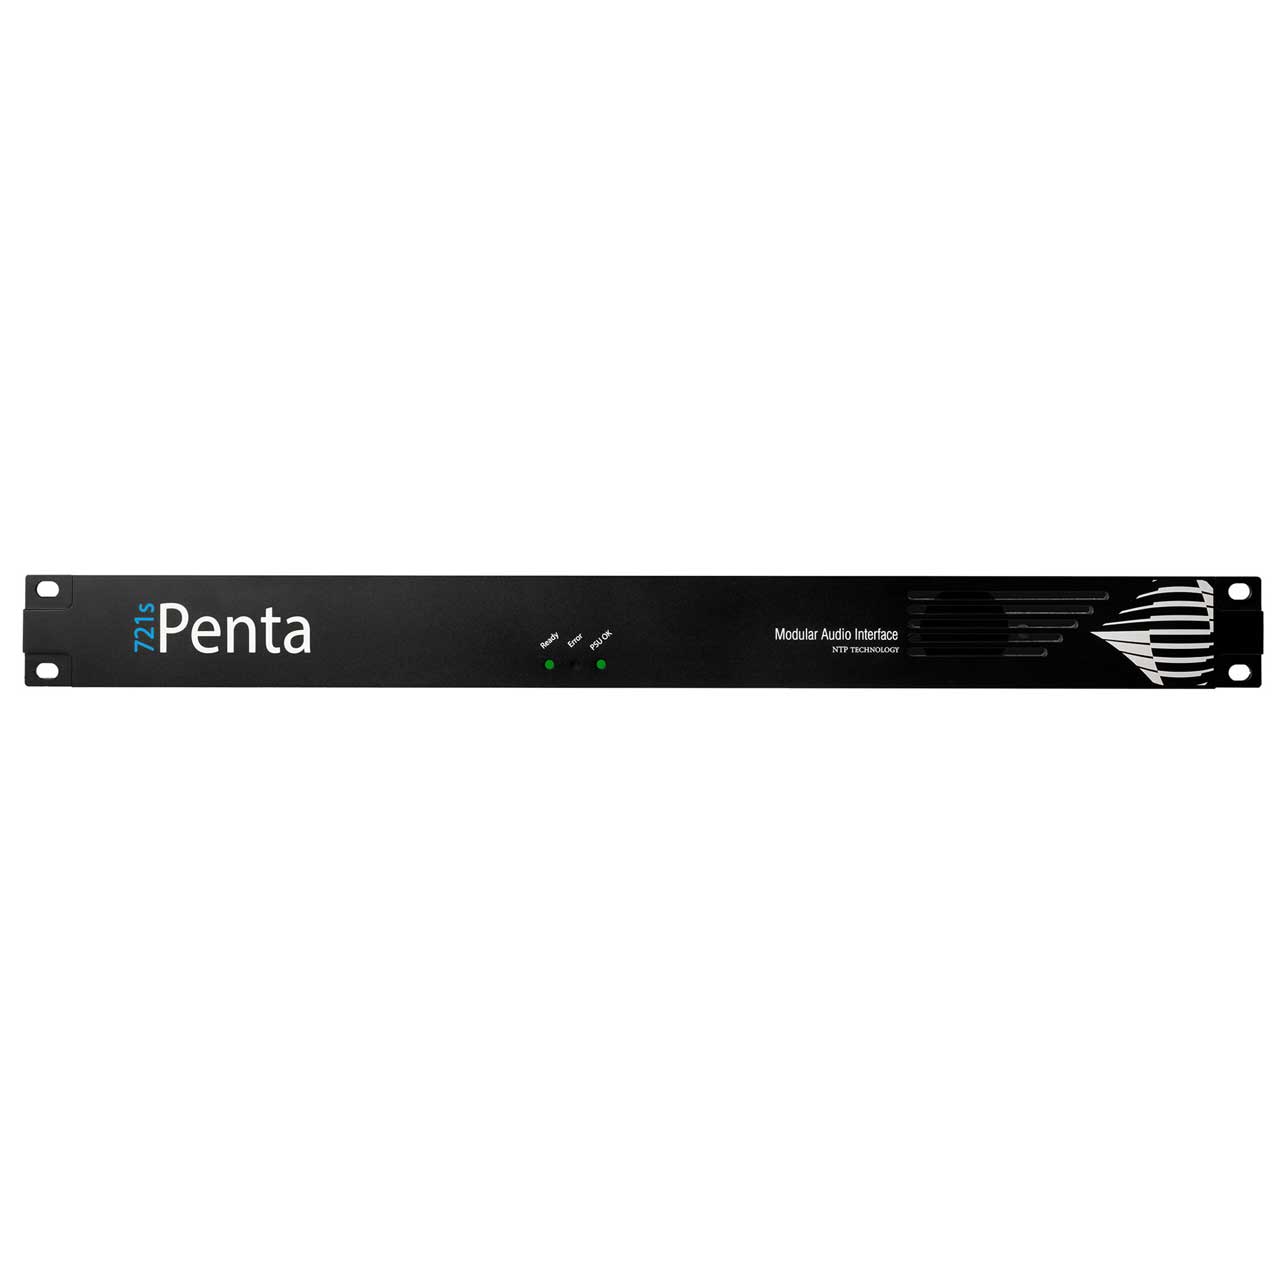 PENTA-721S Modular Router with 1 Slot / MADI / AES / Dante / Dual PSU and Dual Power Socket PENTA-721S